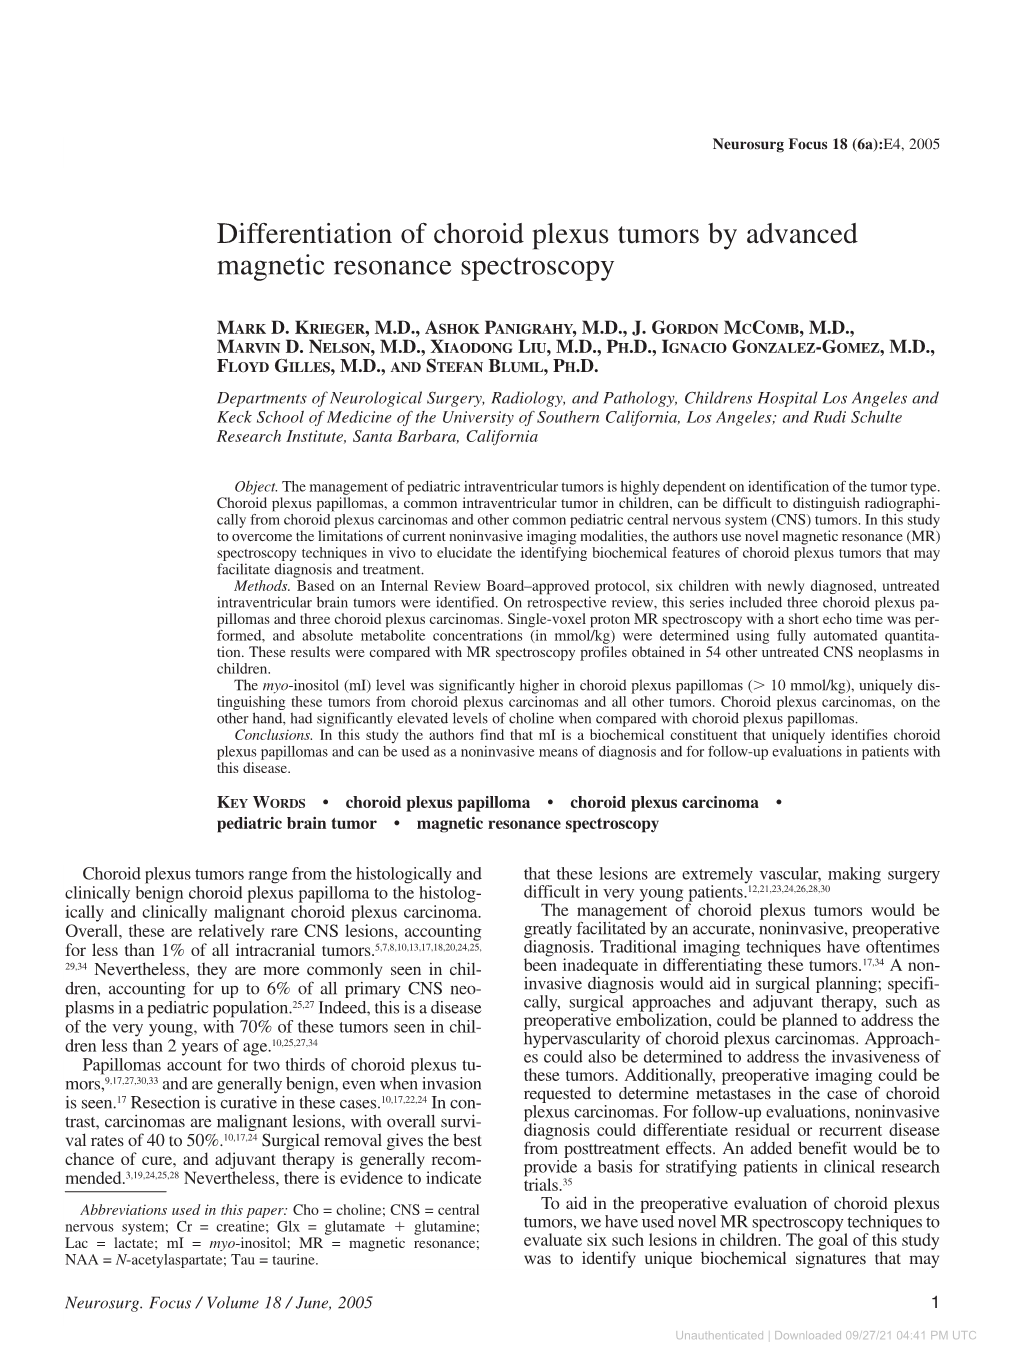 Differentiation of Choroid Plexus Tumors by Advanced Magnetic Resonance Spectroscopy